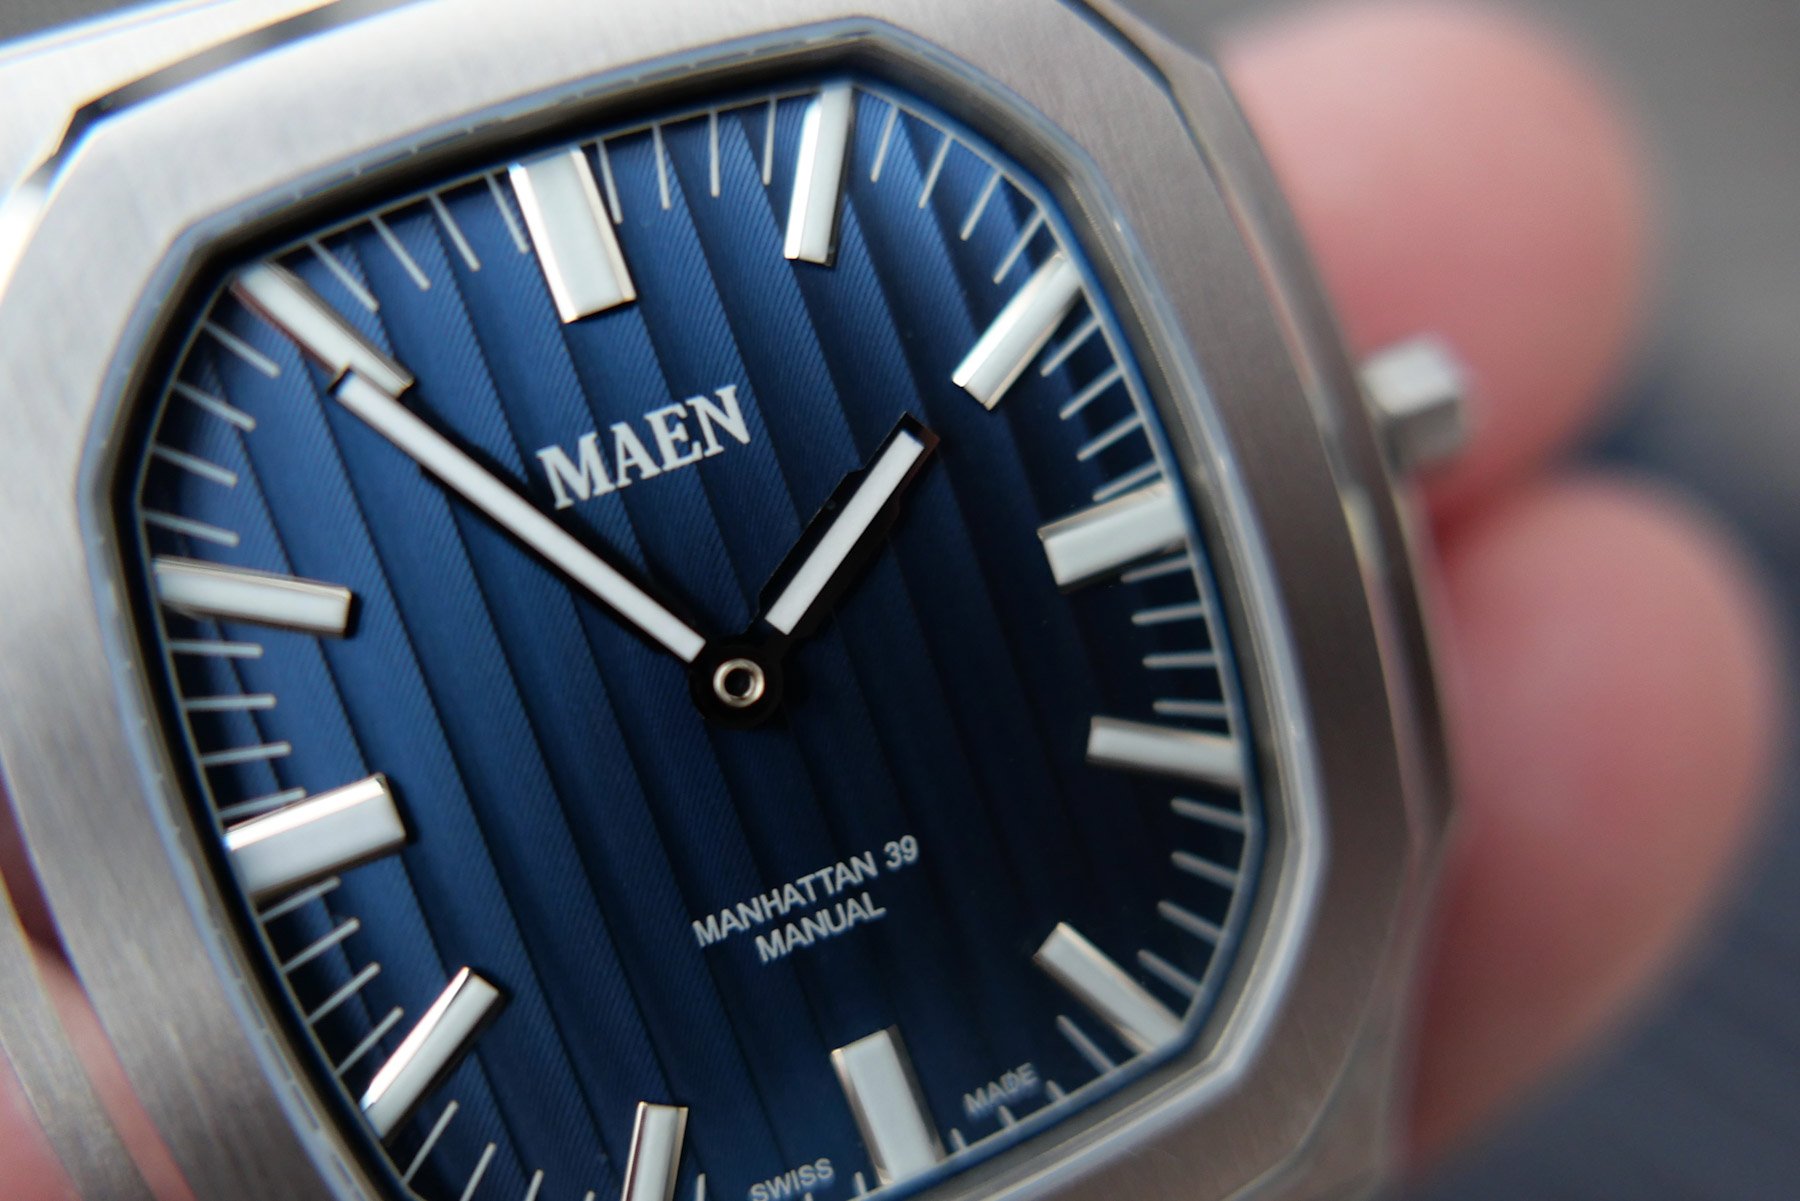 Обзор часов Maen Manhattan 39 Ultra-Thin - слияние стиля и изящества